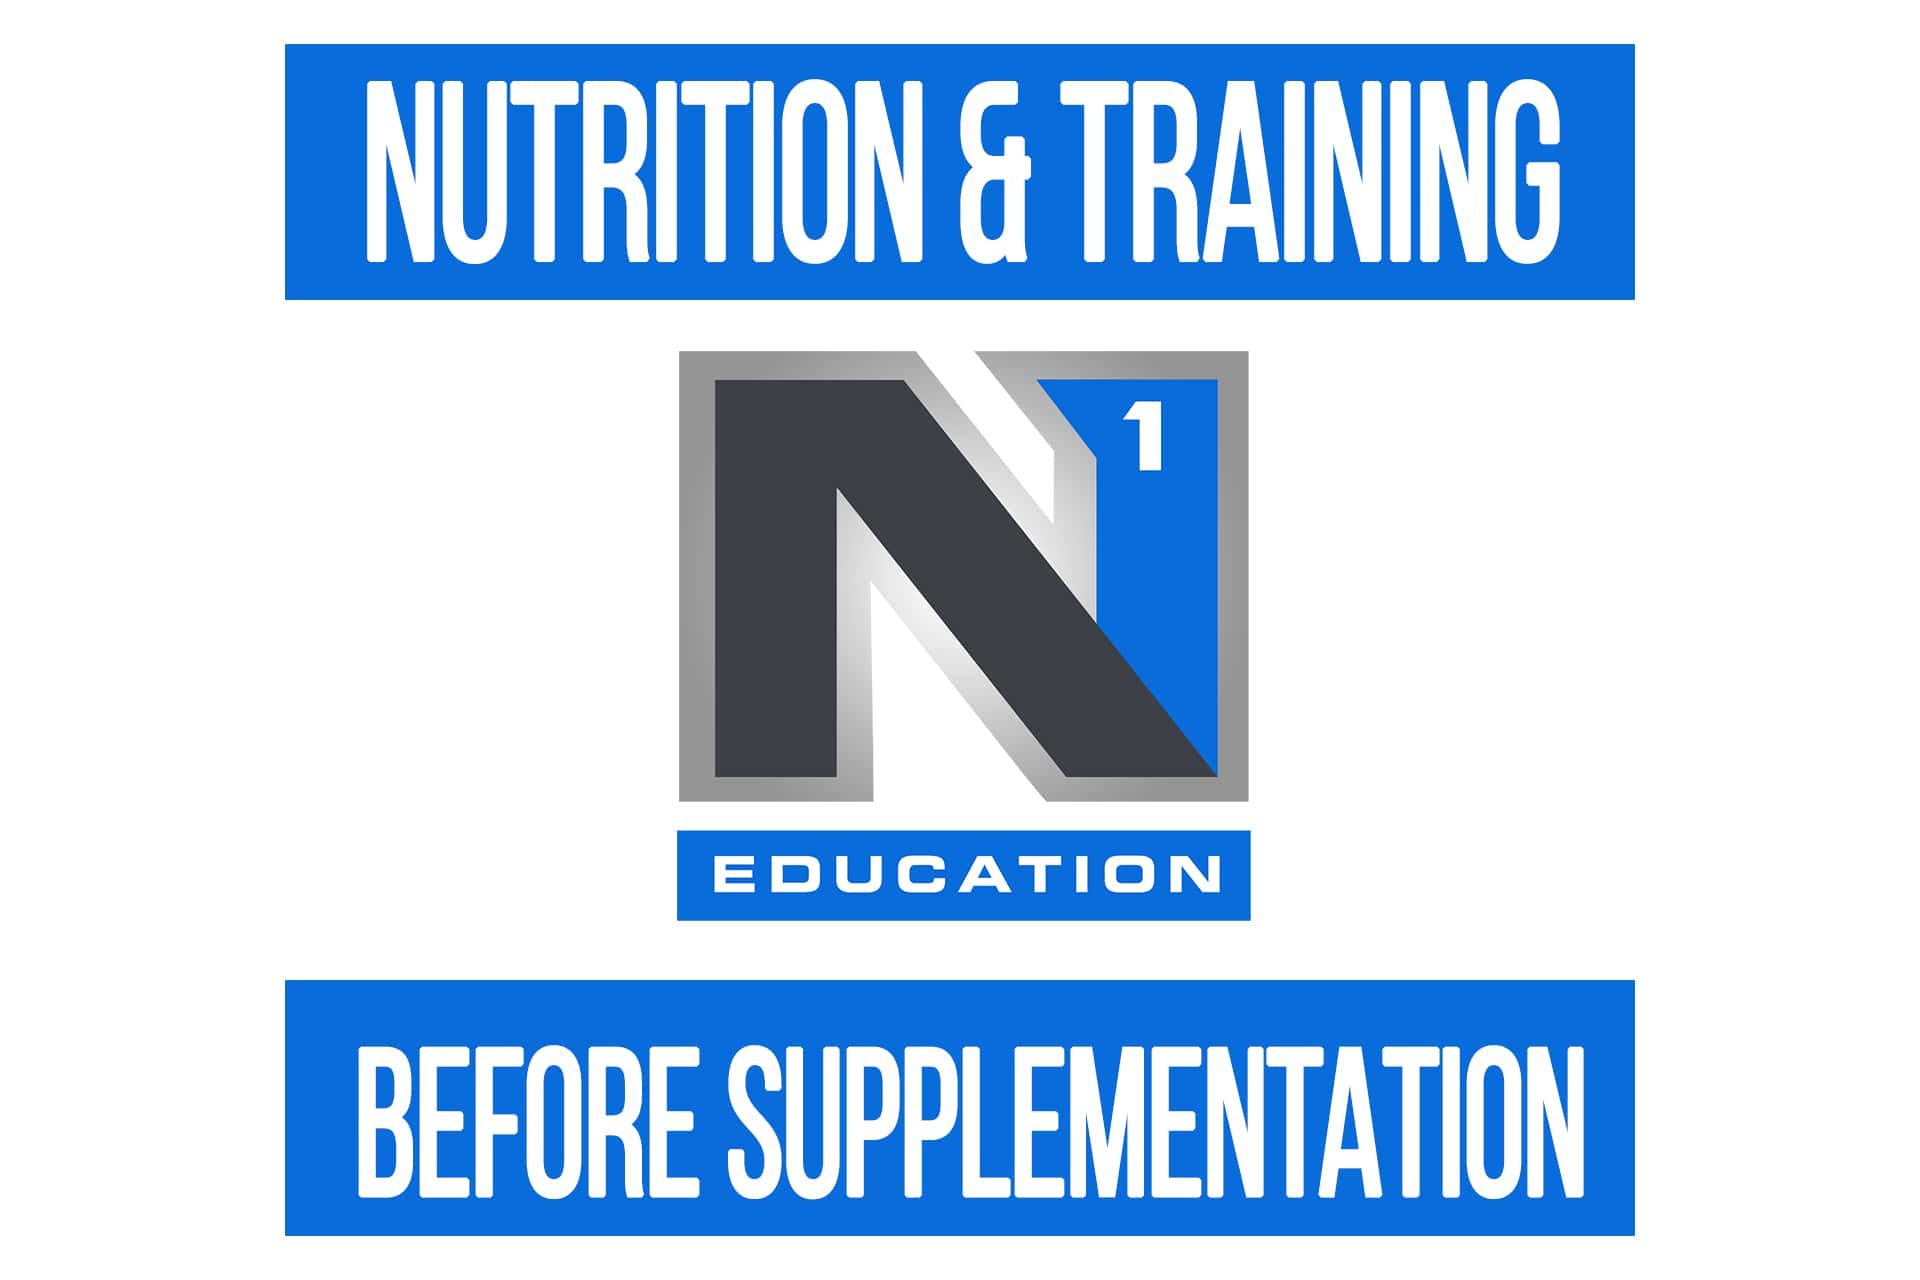 Nutrition & Training Before Supplementation